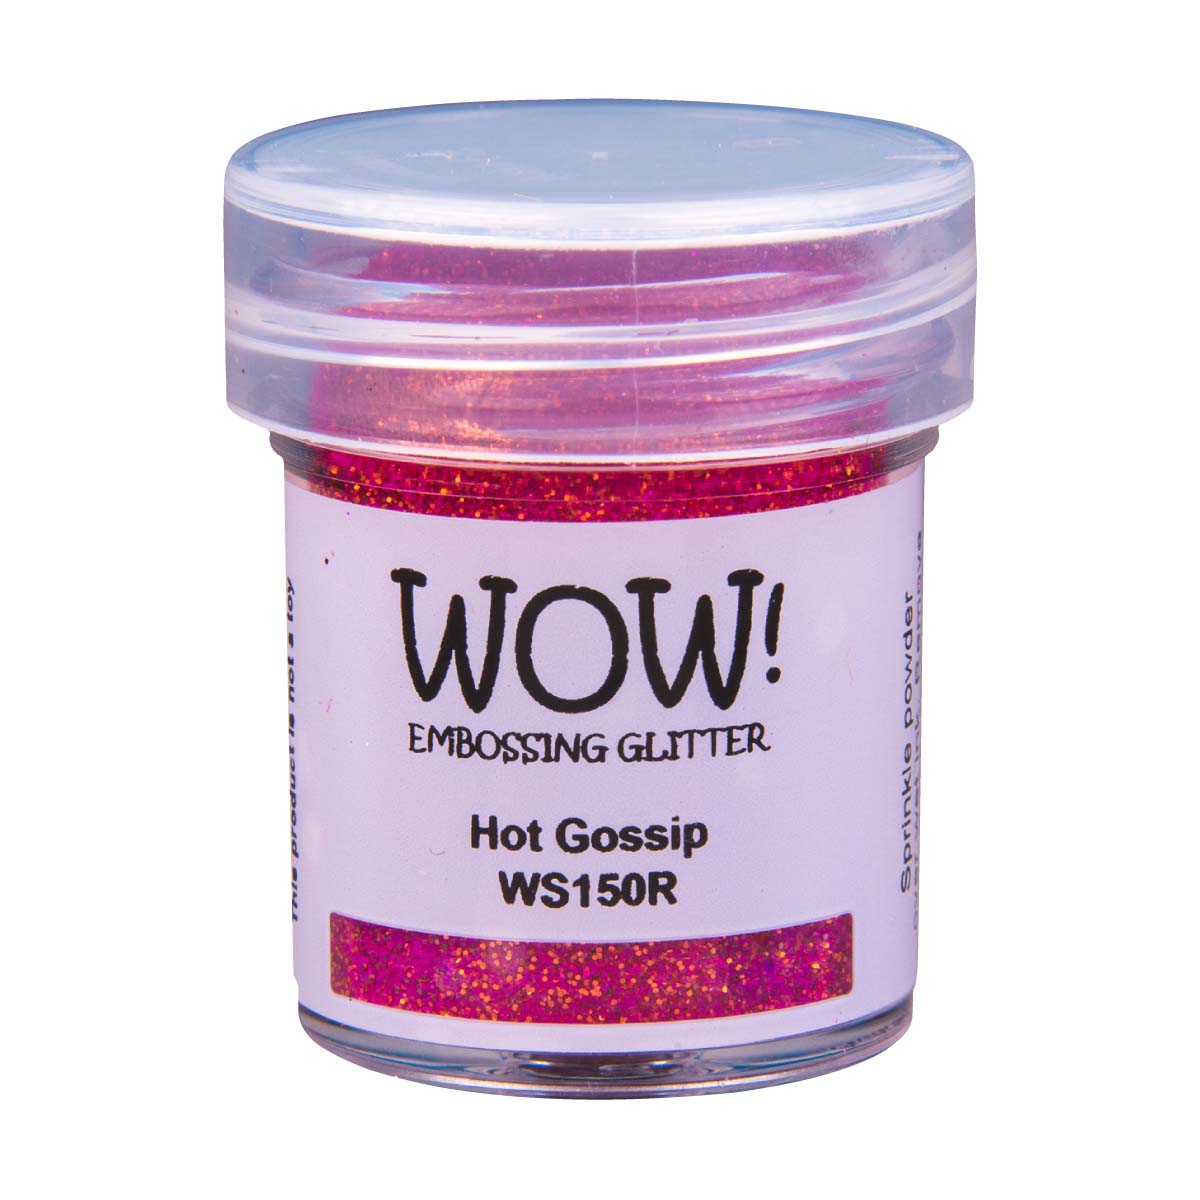 WOW! Embossing Glitter, 15ml Jar - Hot Gossip